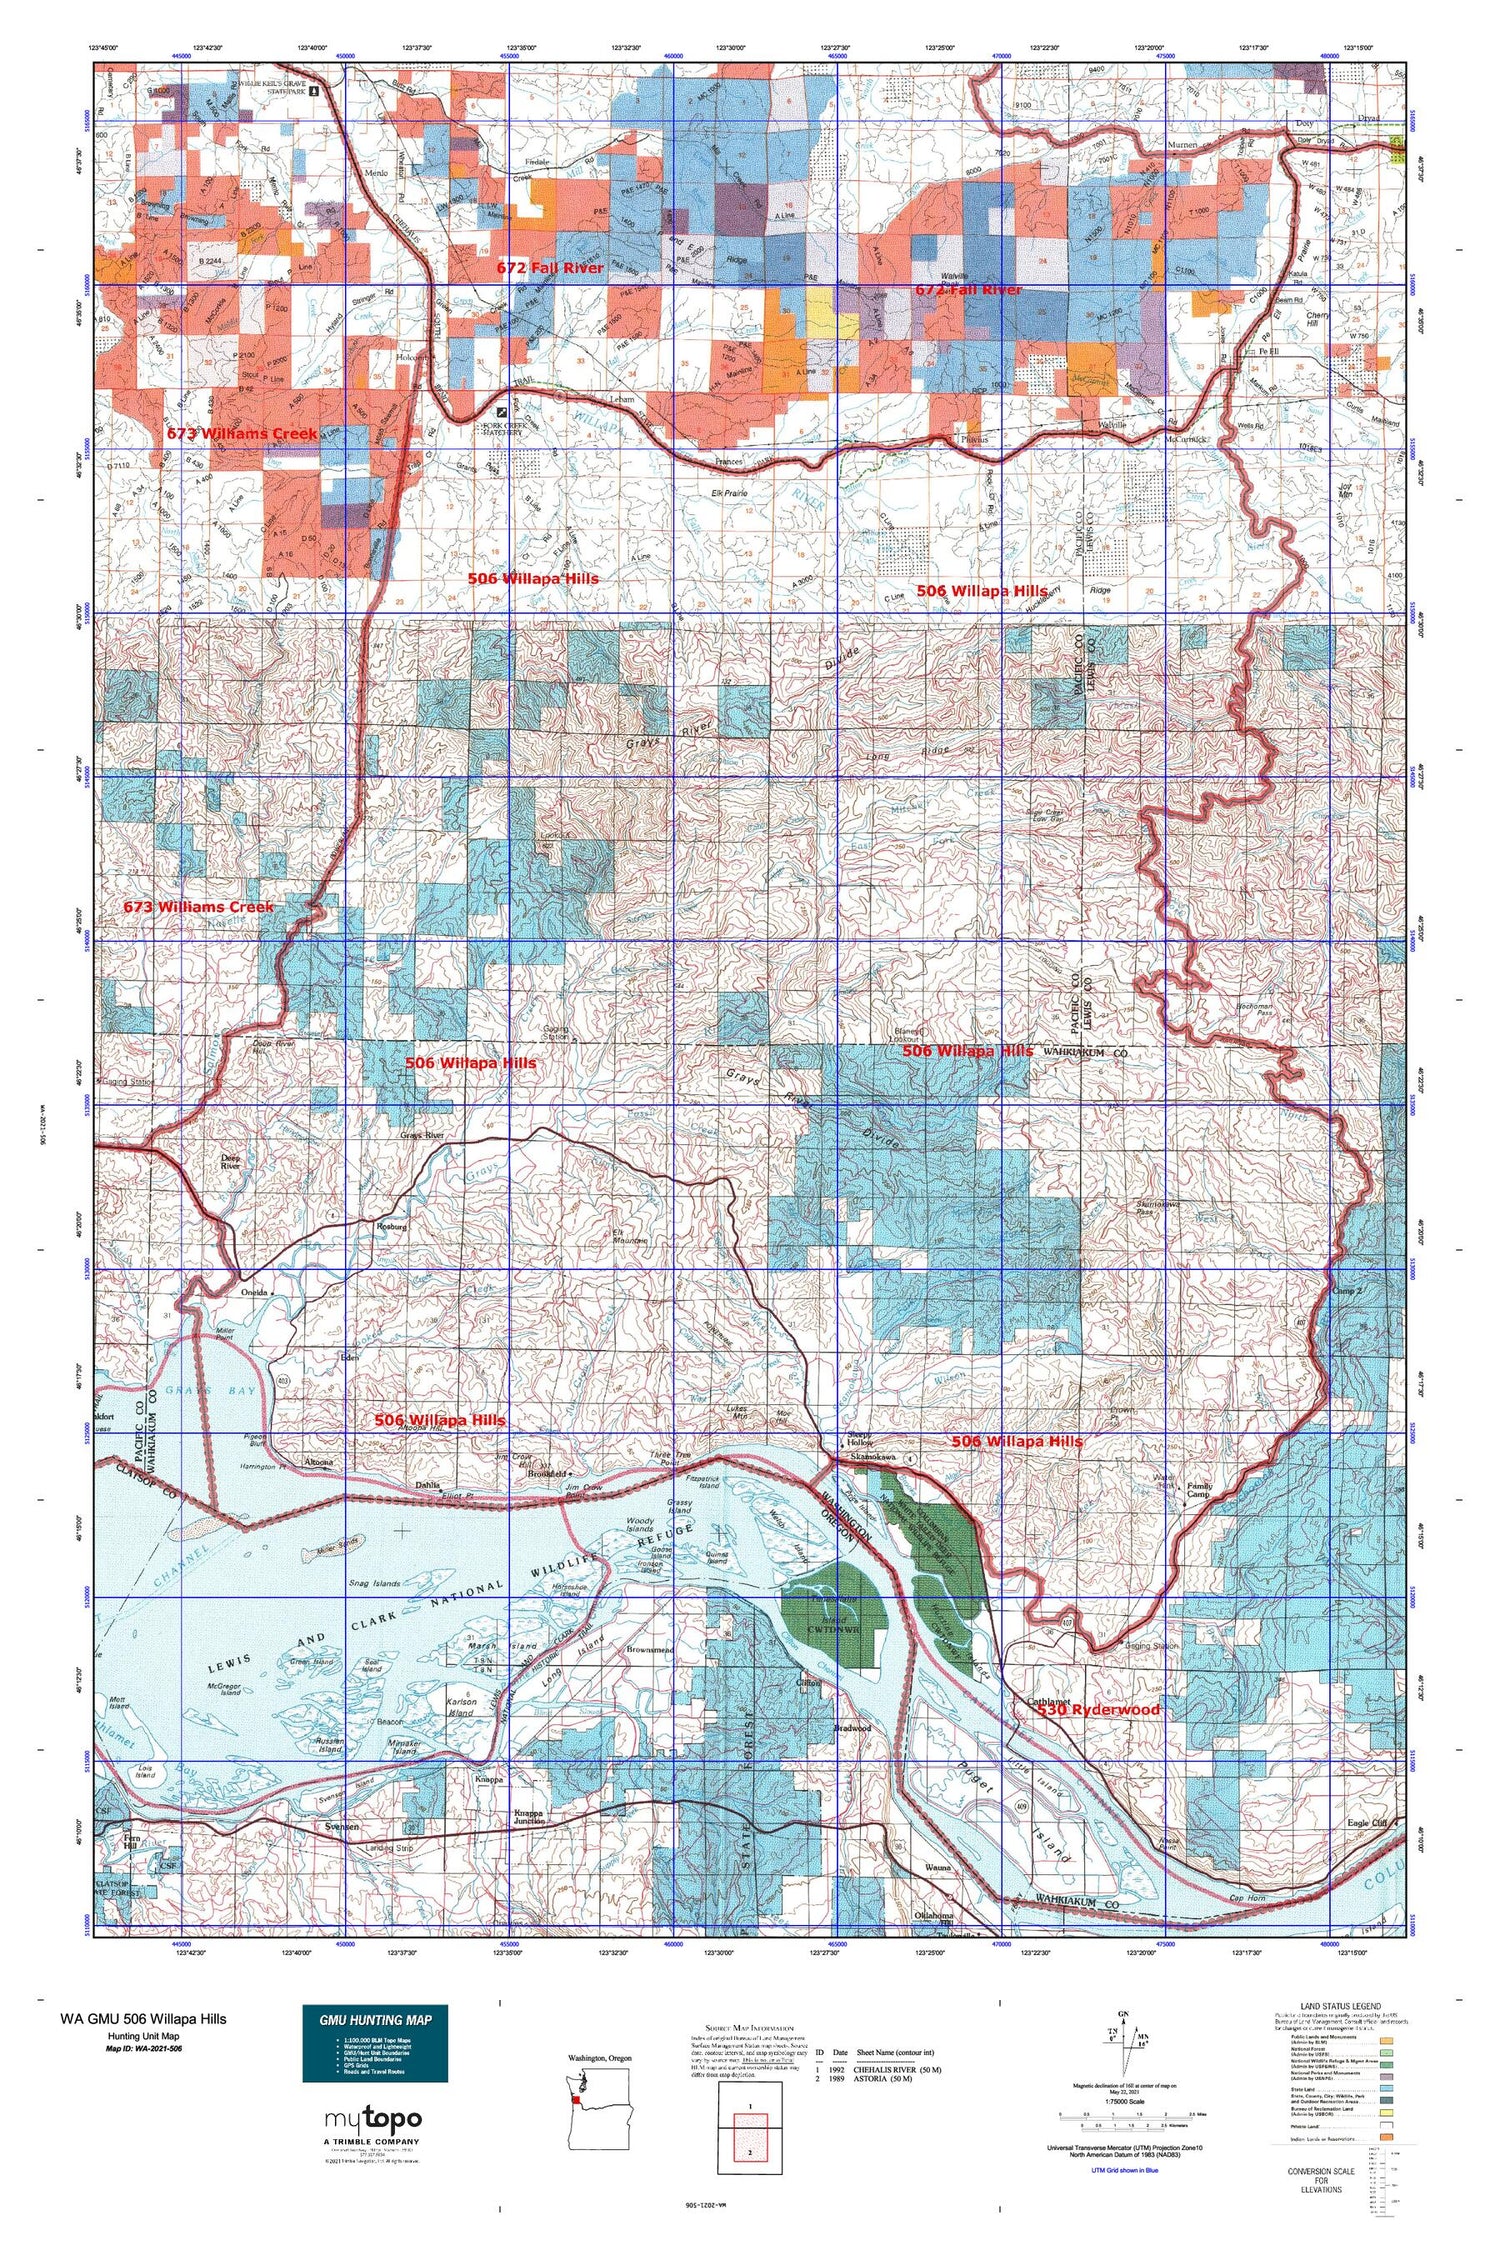 Washington GMU 506 Willapa Hills Map Image